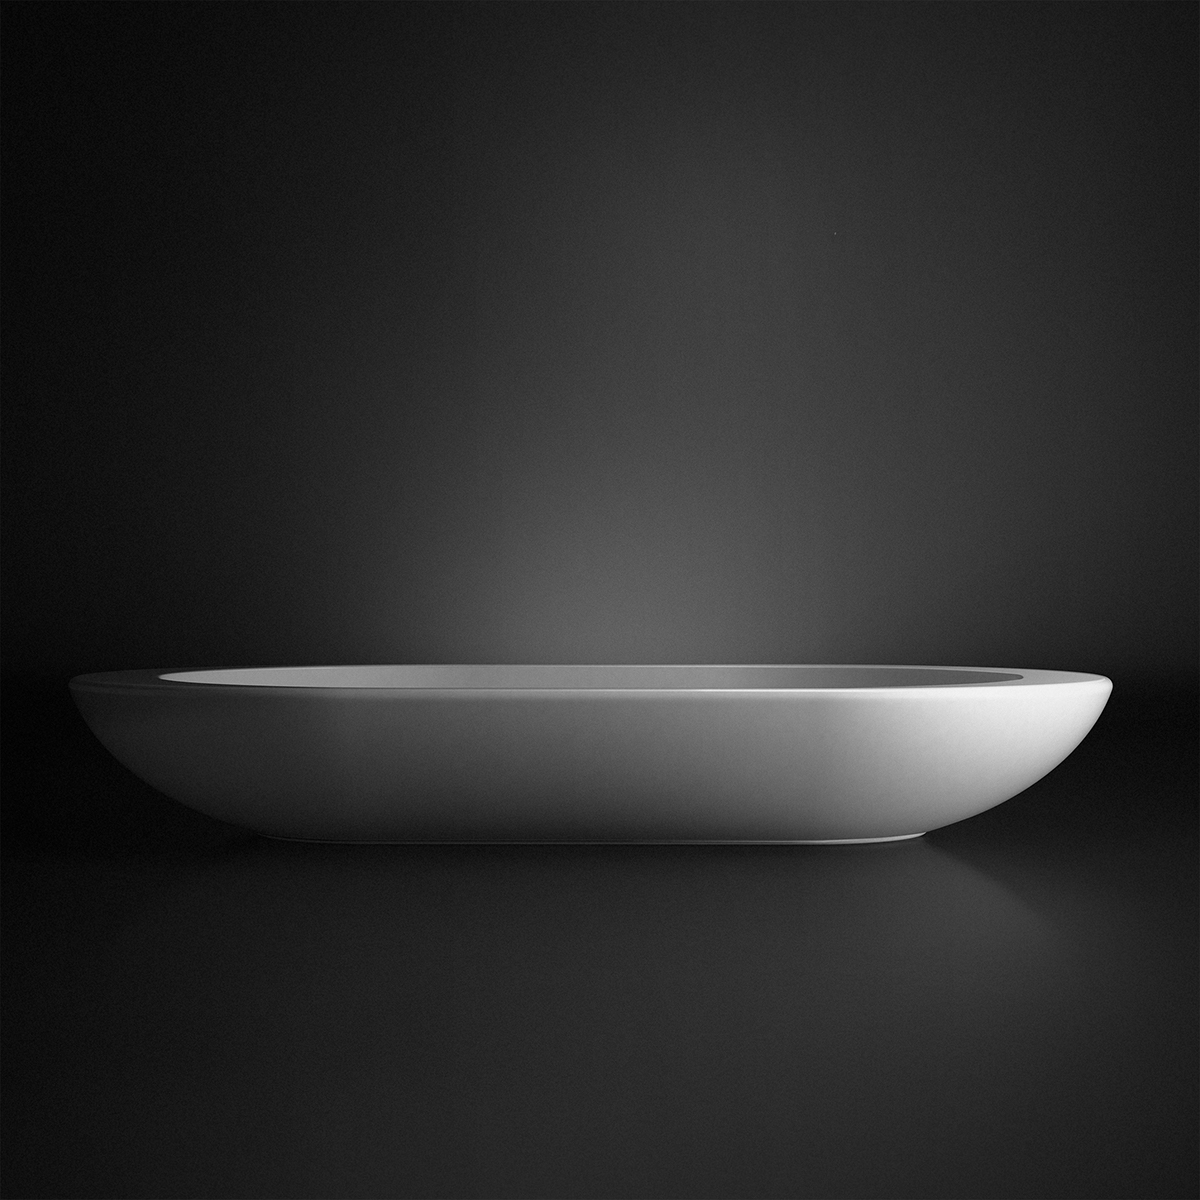 Sanitary ware 3D vray 3d max ceramic bathroom black and white studio shot